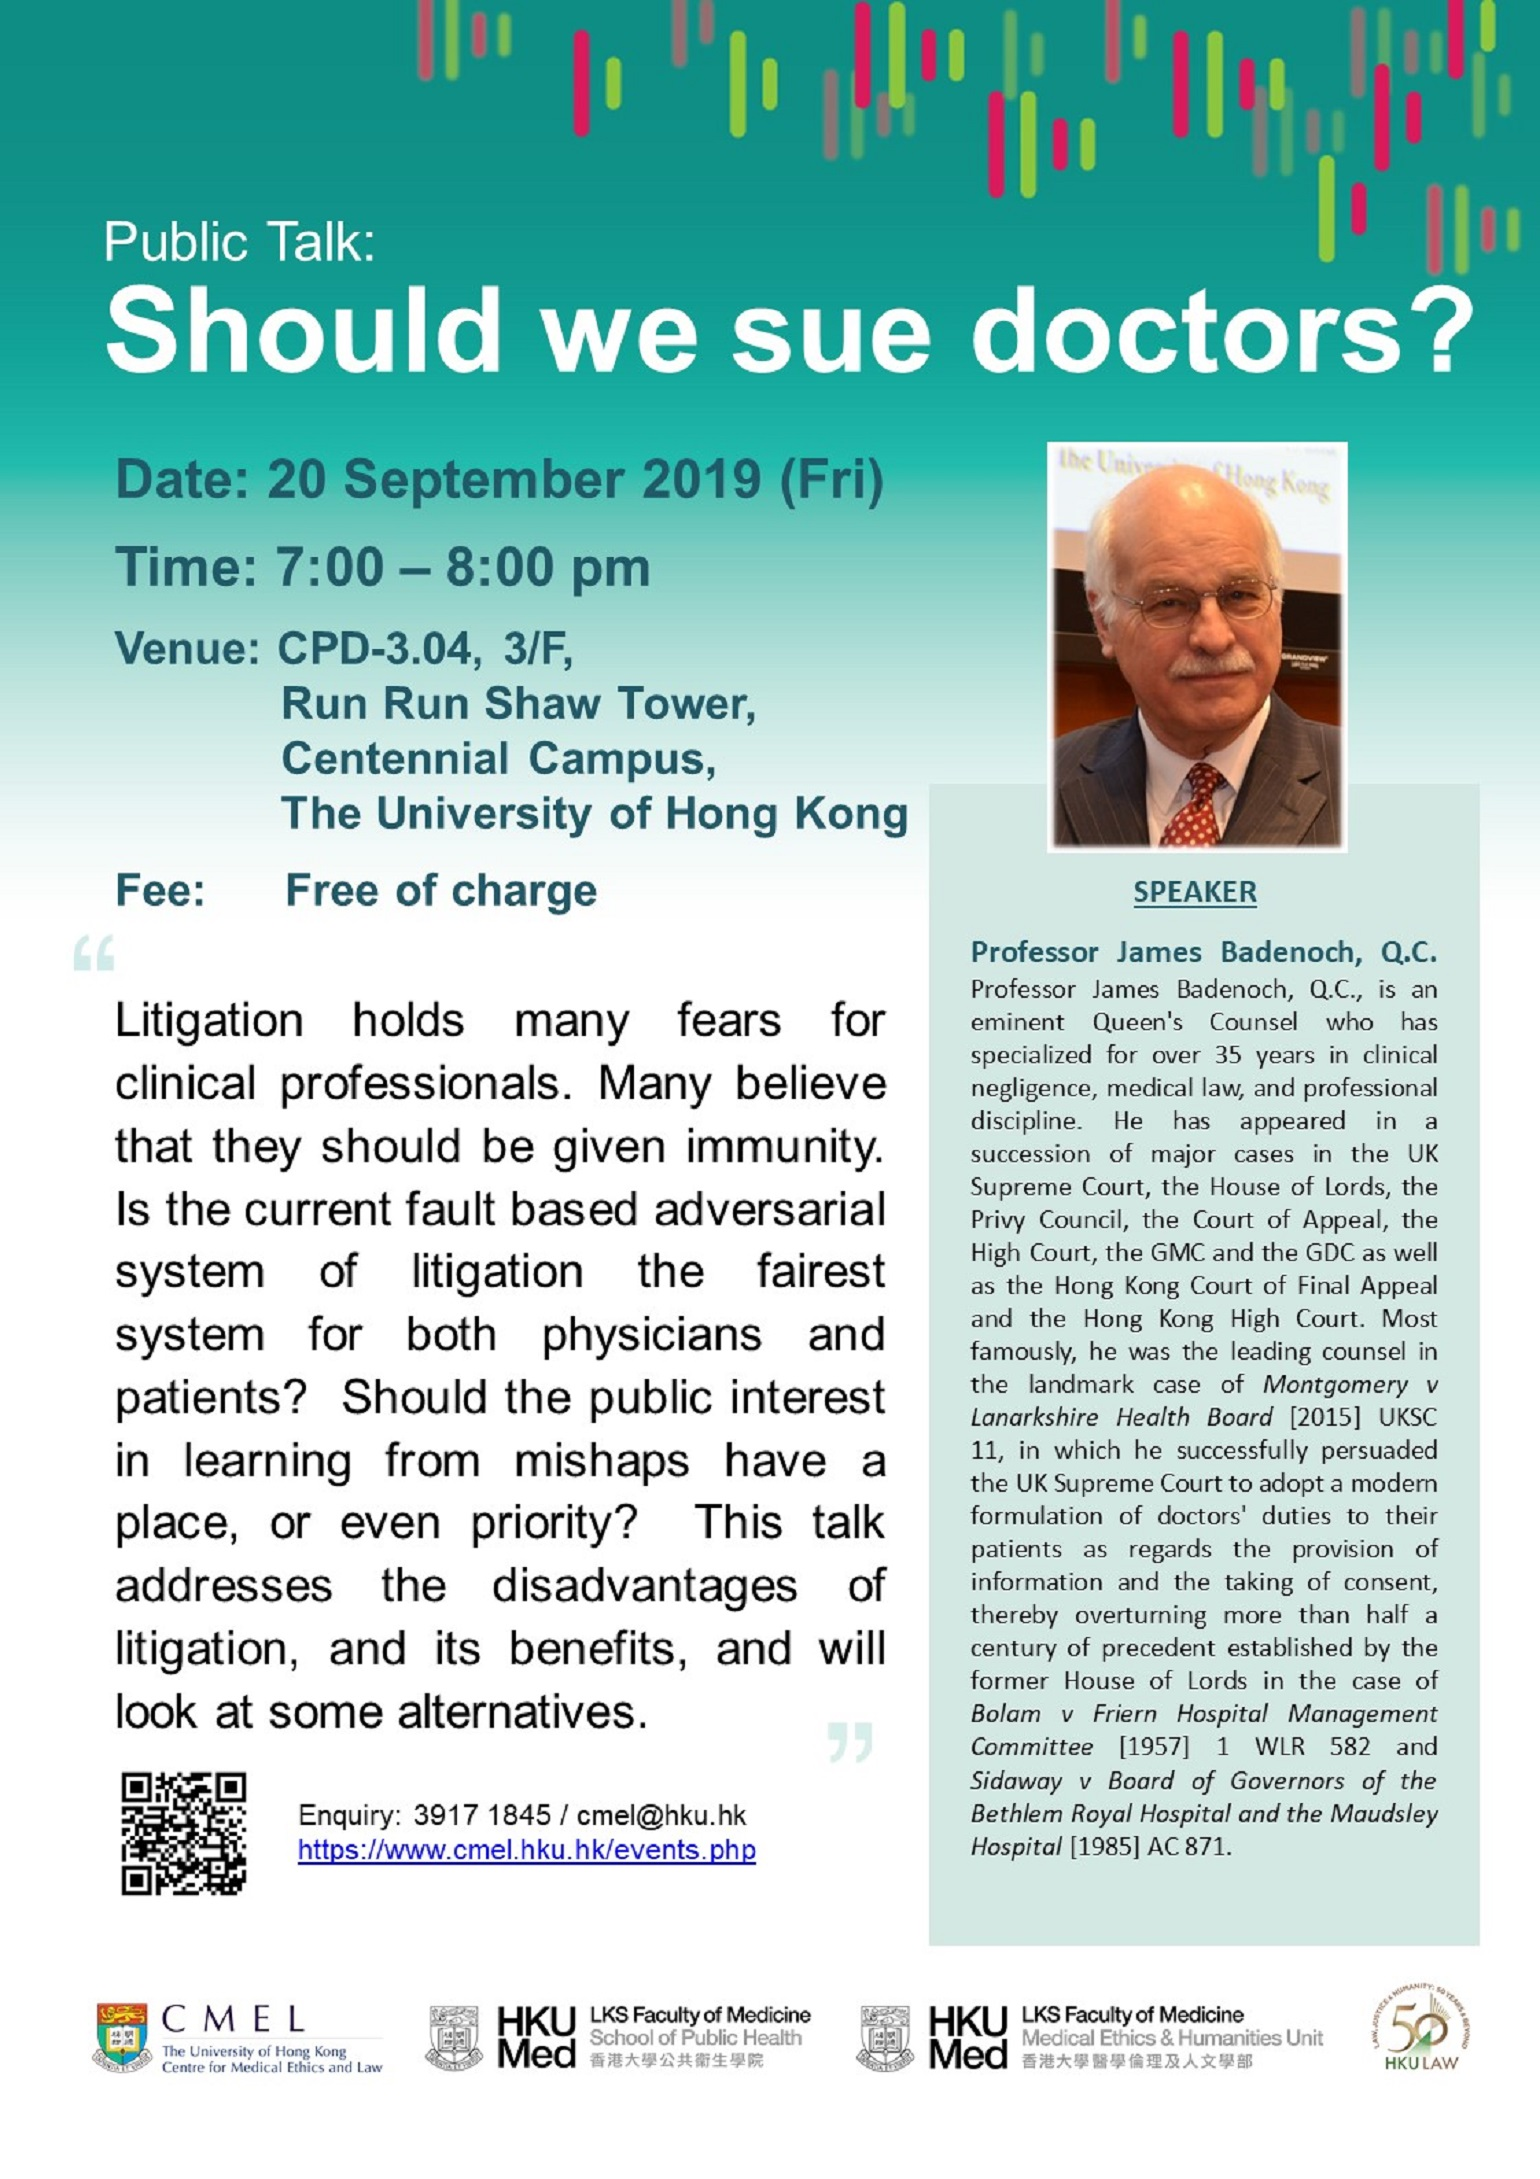 Public Talk: Should we sue doctors? Date: 20 Sep(Fri). Time: 7pm. Venue: CPD-3.04,Run Run Shaw Tower,CPD. Speaker: Prof James Badenoch QC